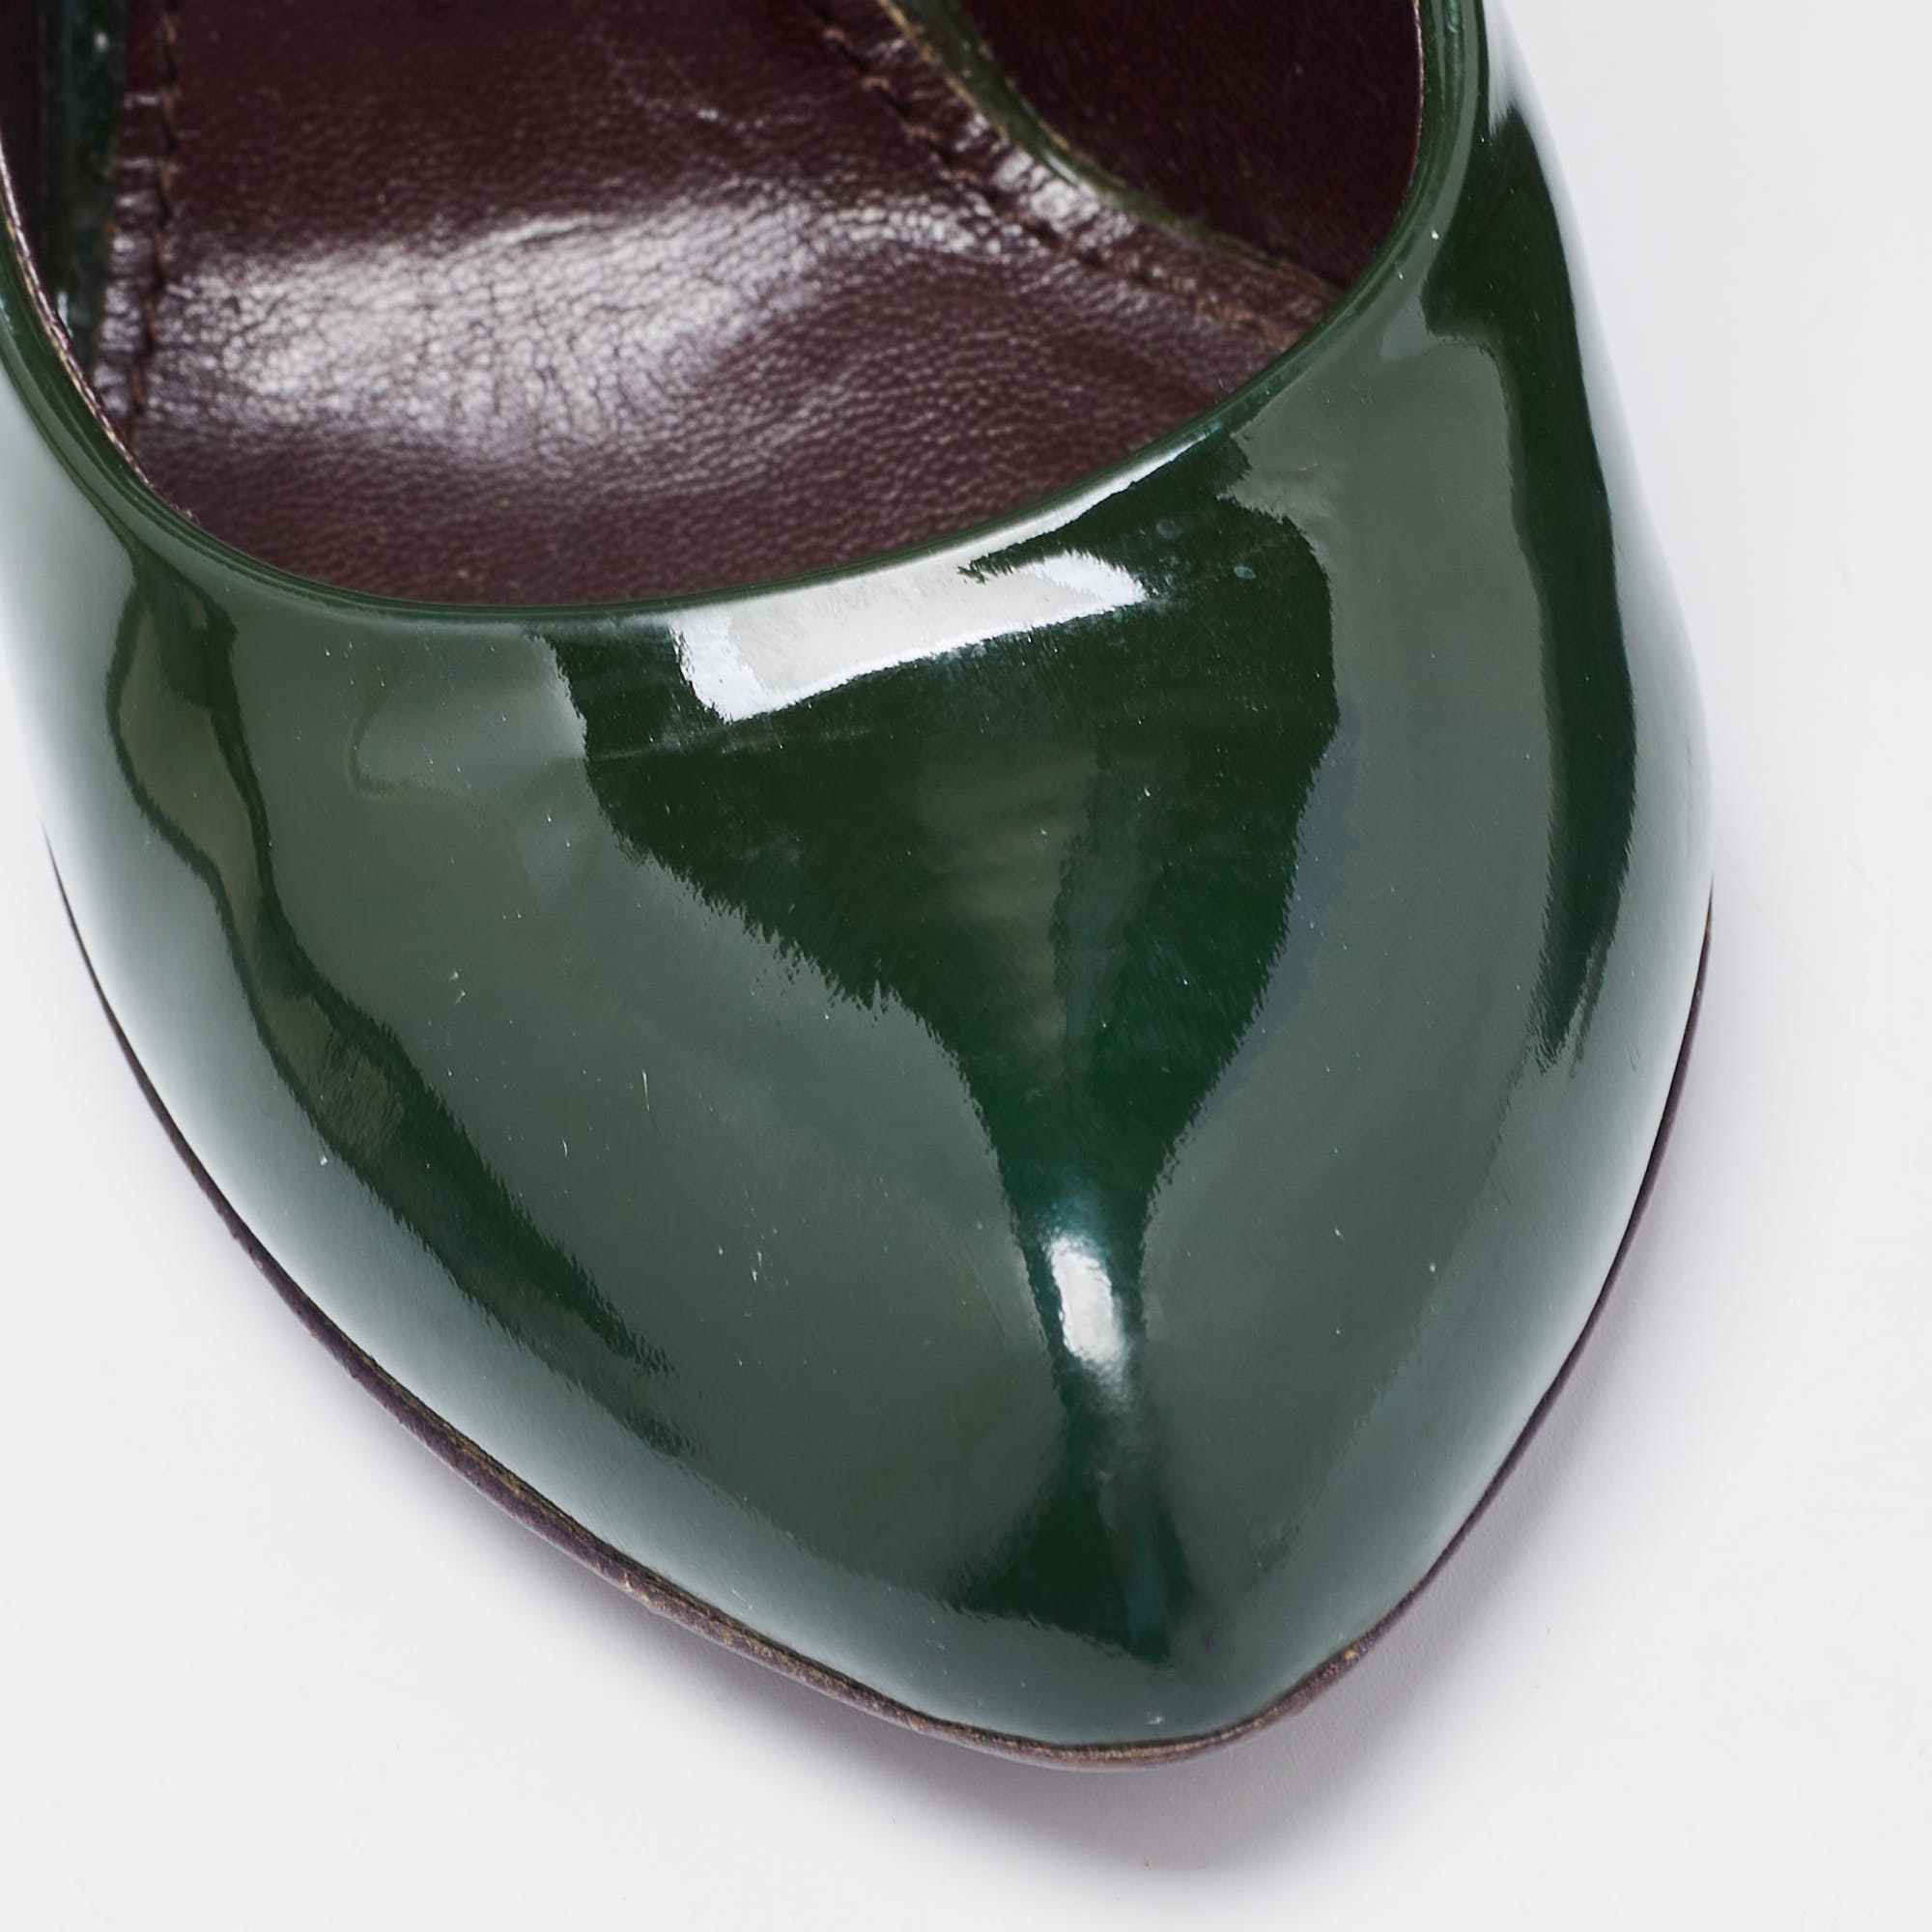 Dolce & Gabbana Green Patent Leather Almond Toe Pumps Size 37.5